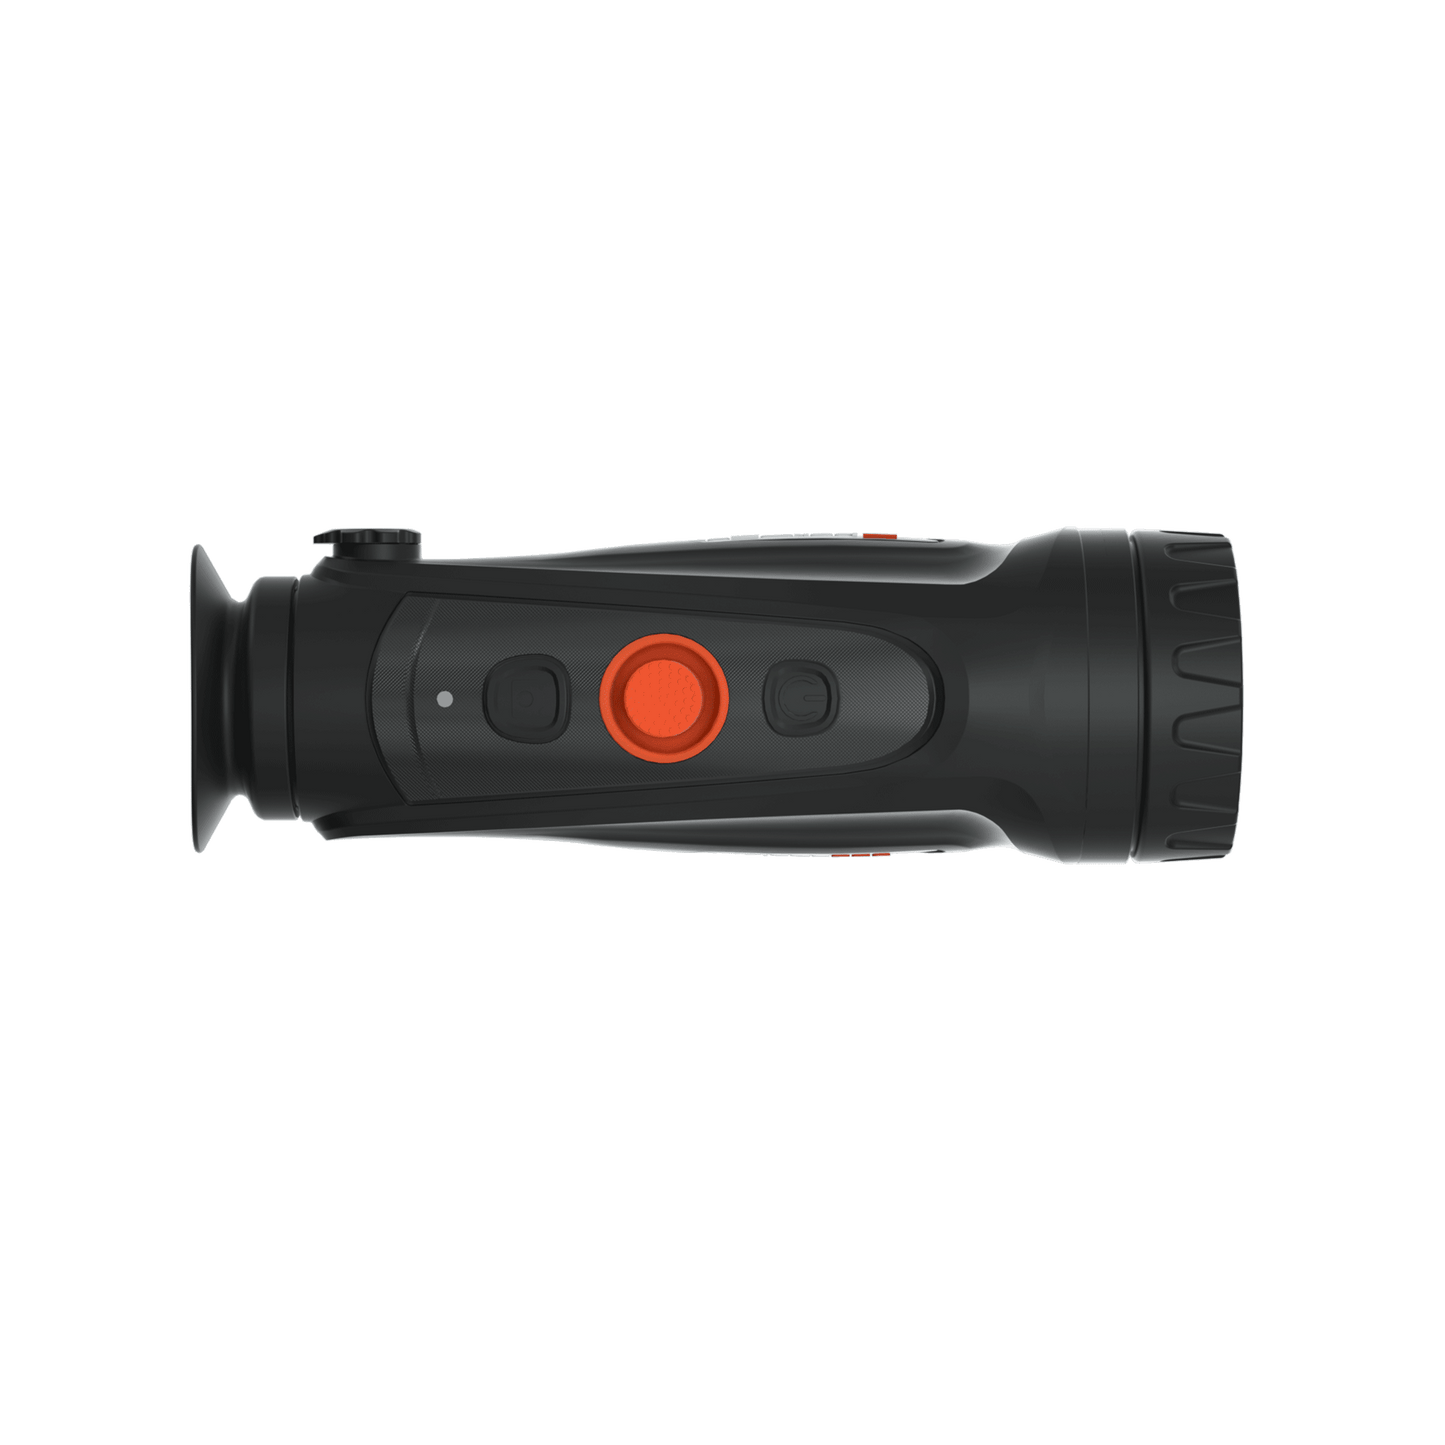 Cyclops 650 Pro Thermal Imaging Monocular